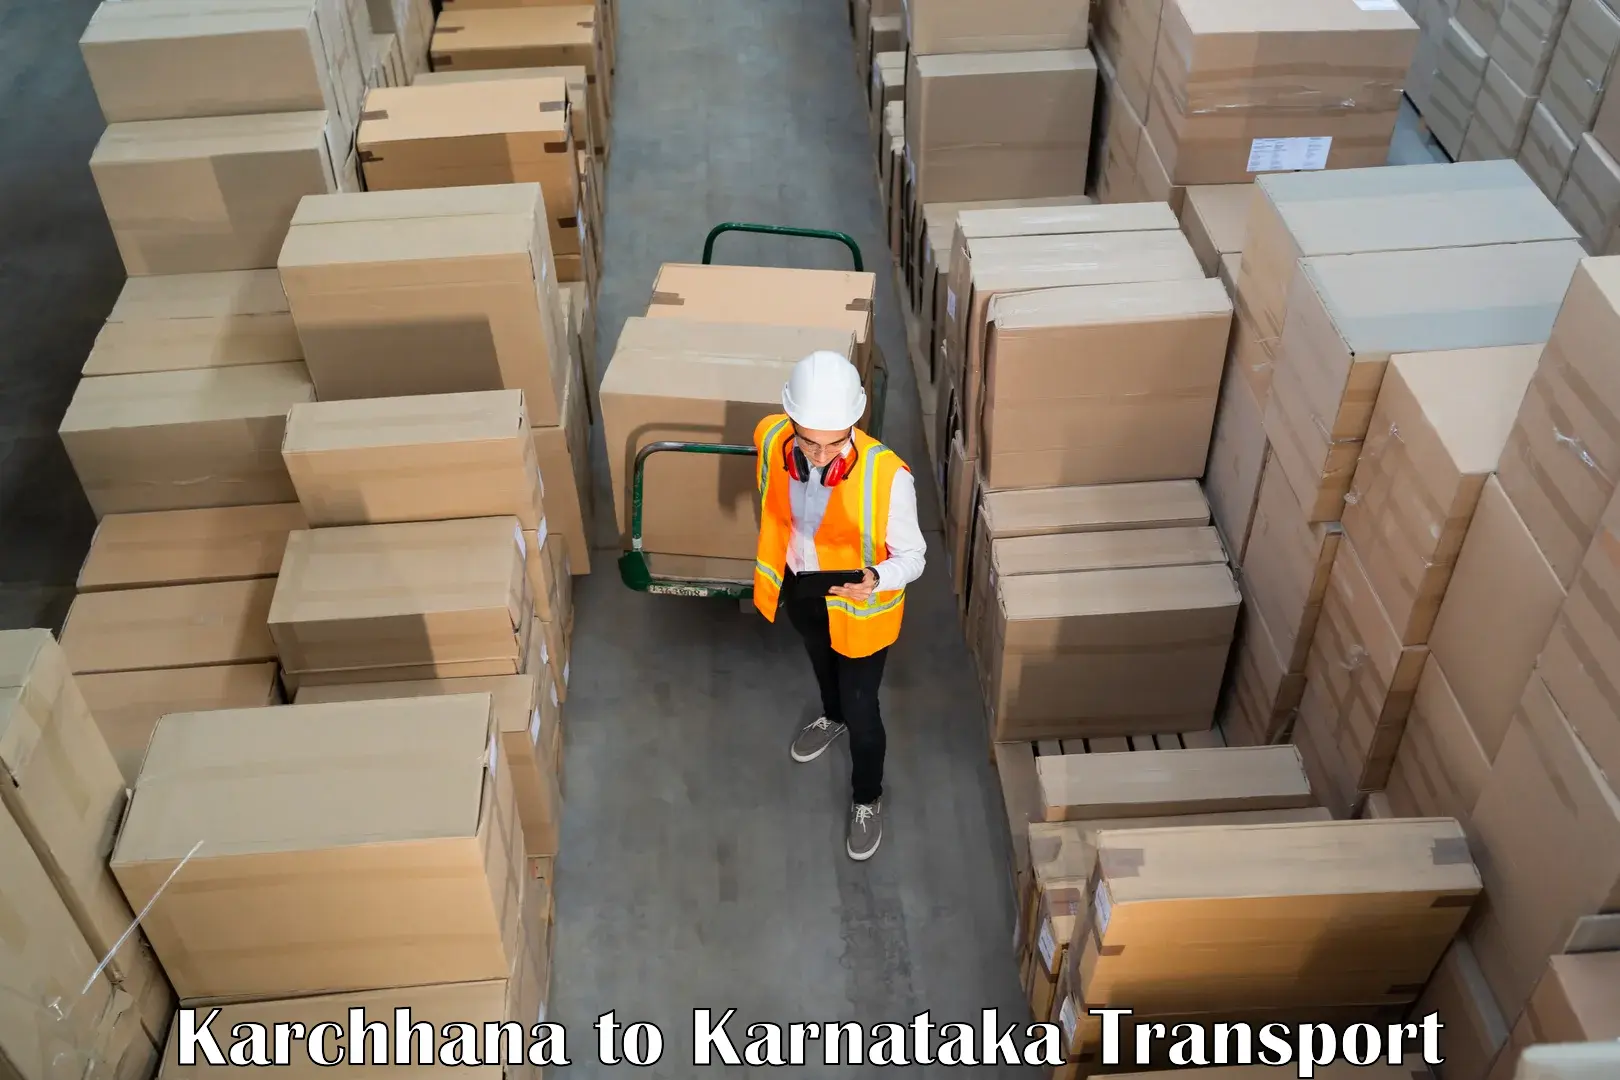 Truck transport companies in India Karchhana to Aurad